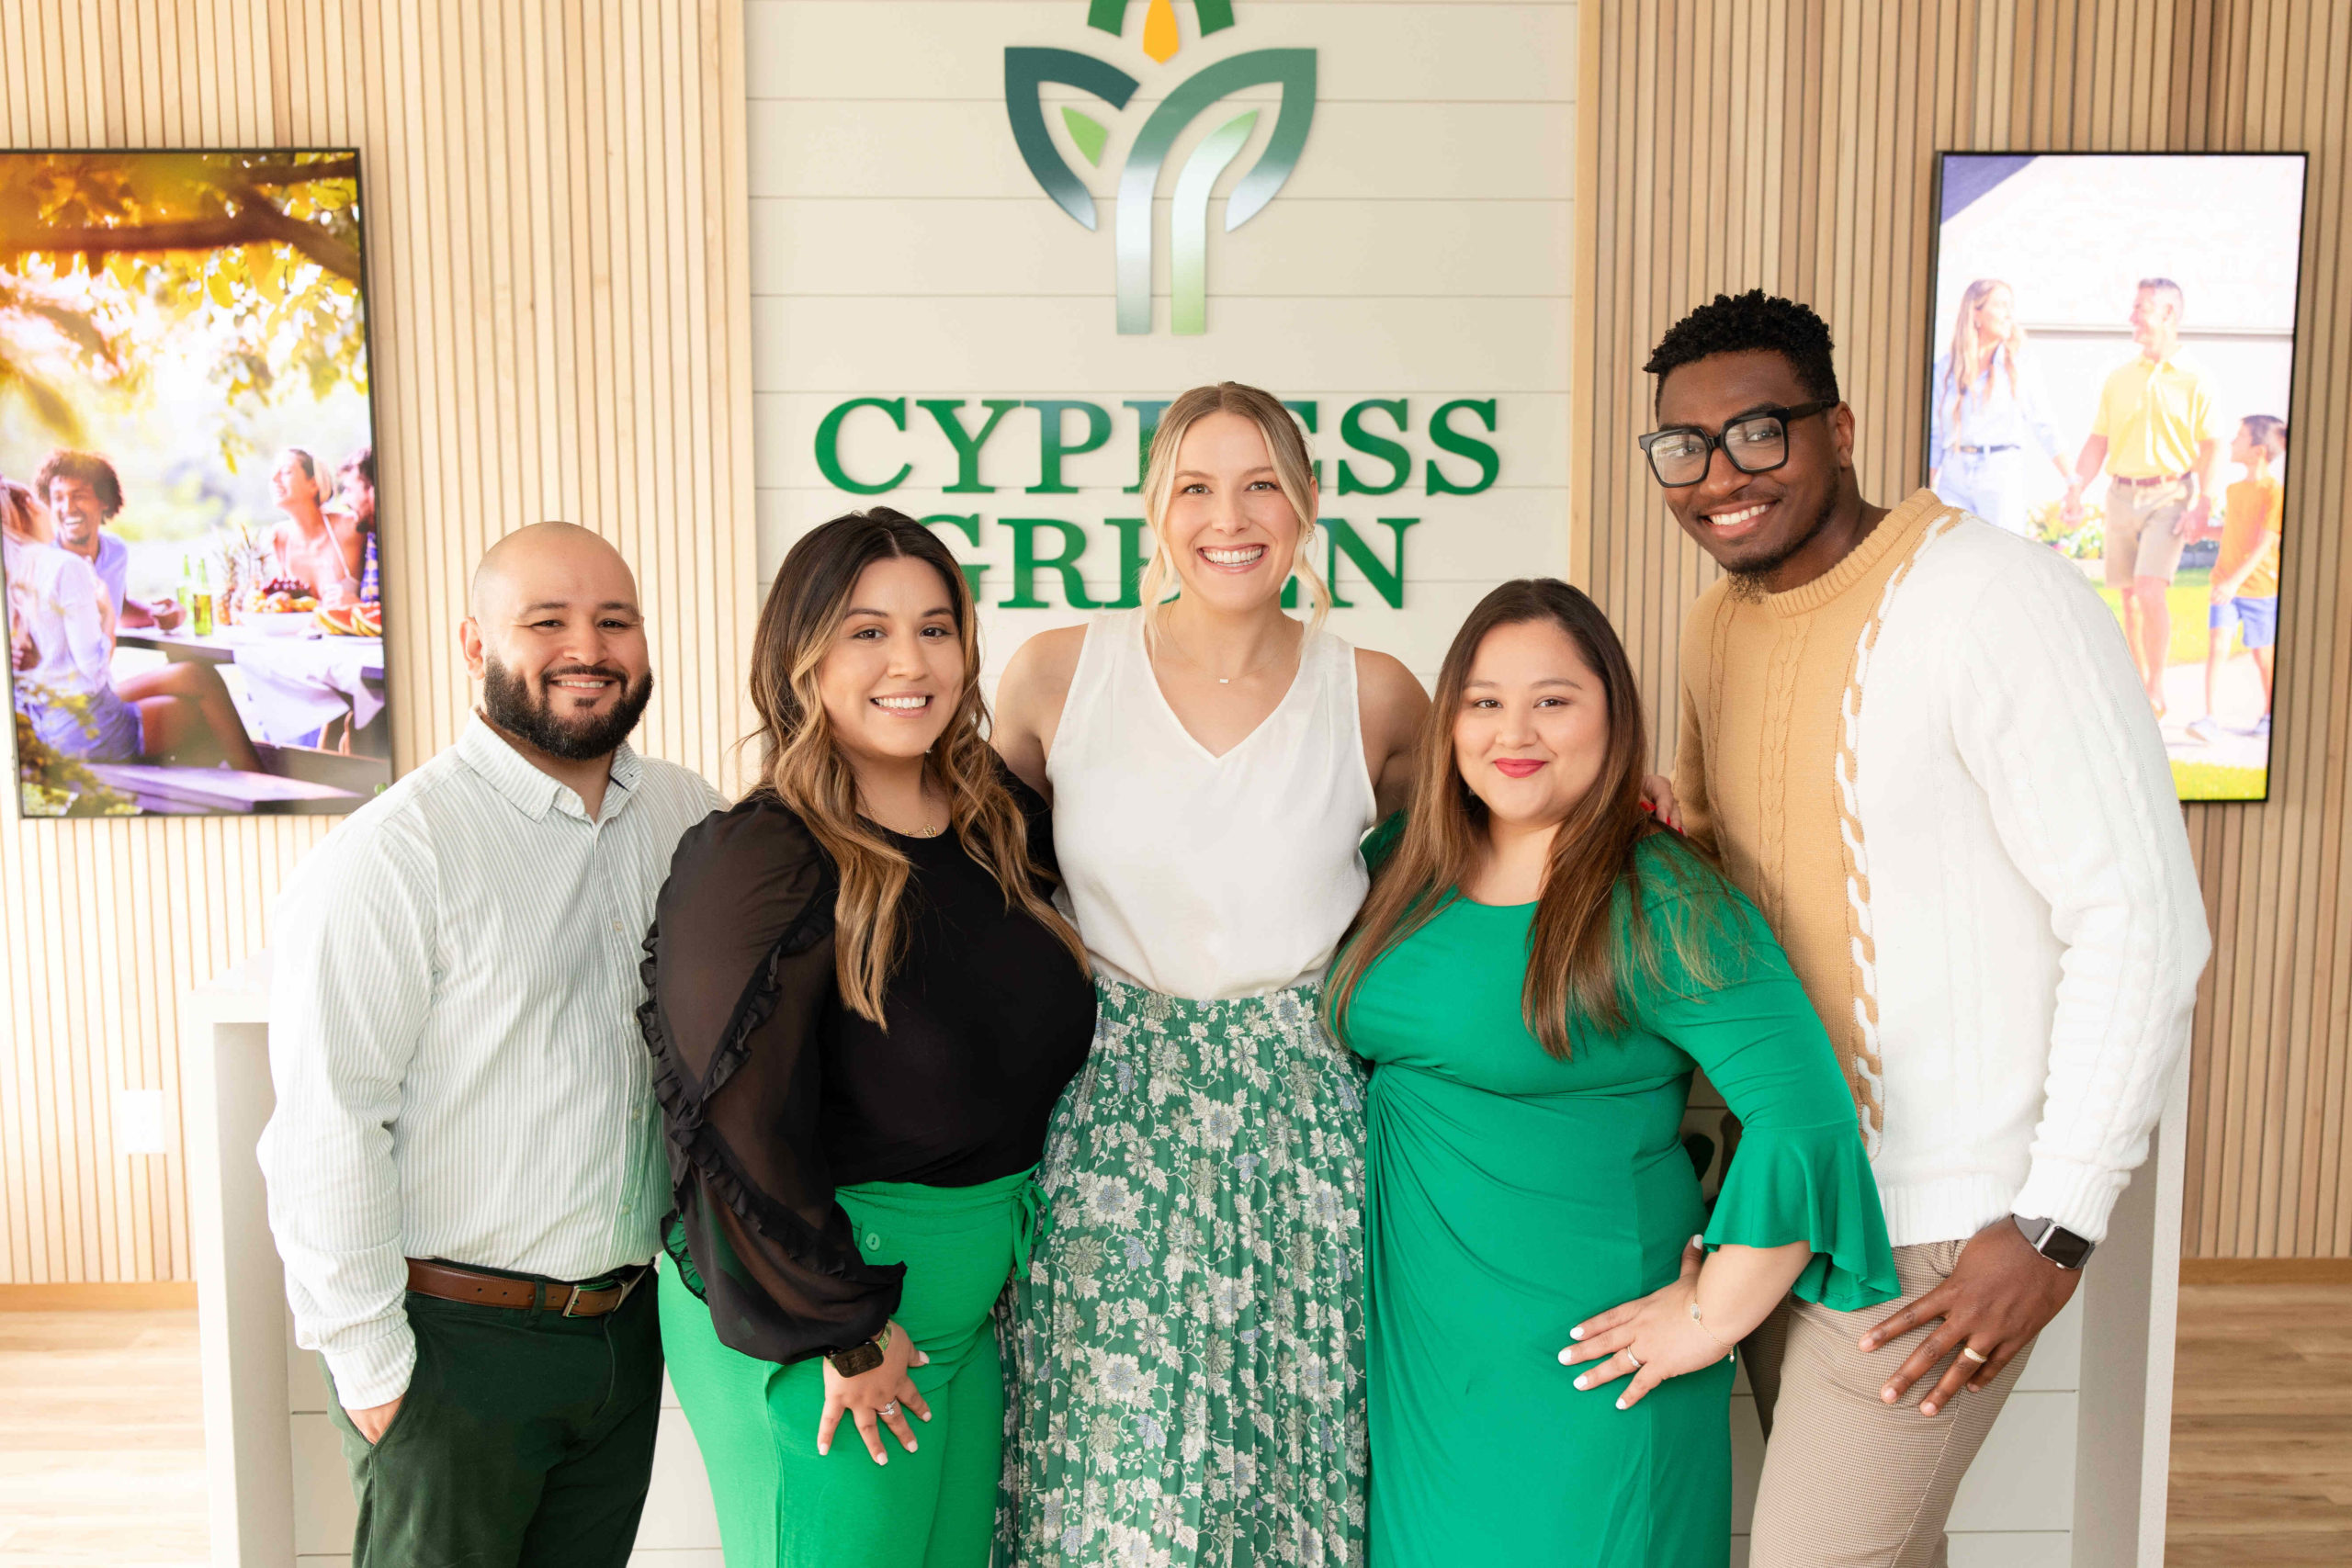 Cypress Green team